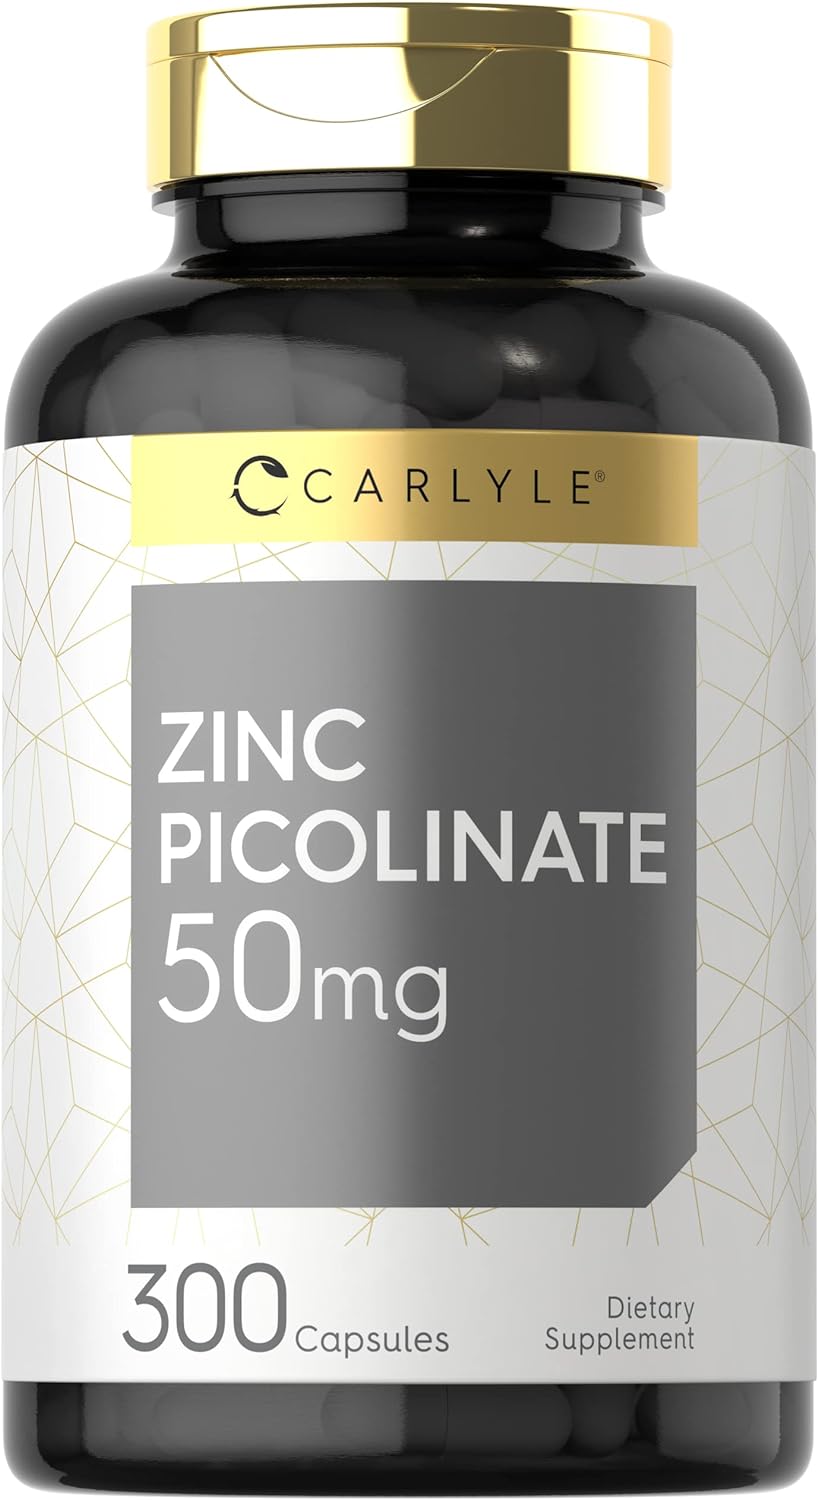 Zinc Picolinate 50mg | 400 Capsules | Value Size | Non-GMO and Gluten Free Supplement | by